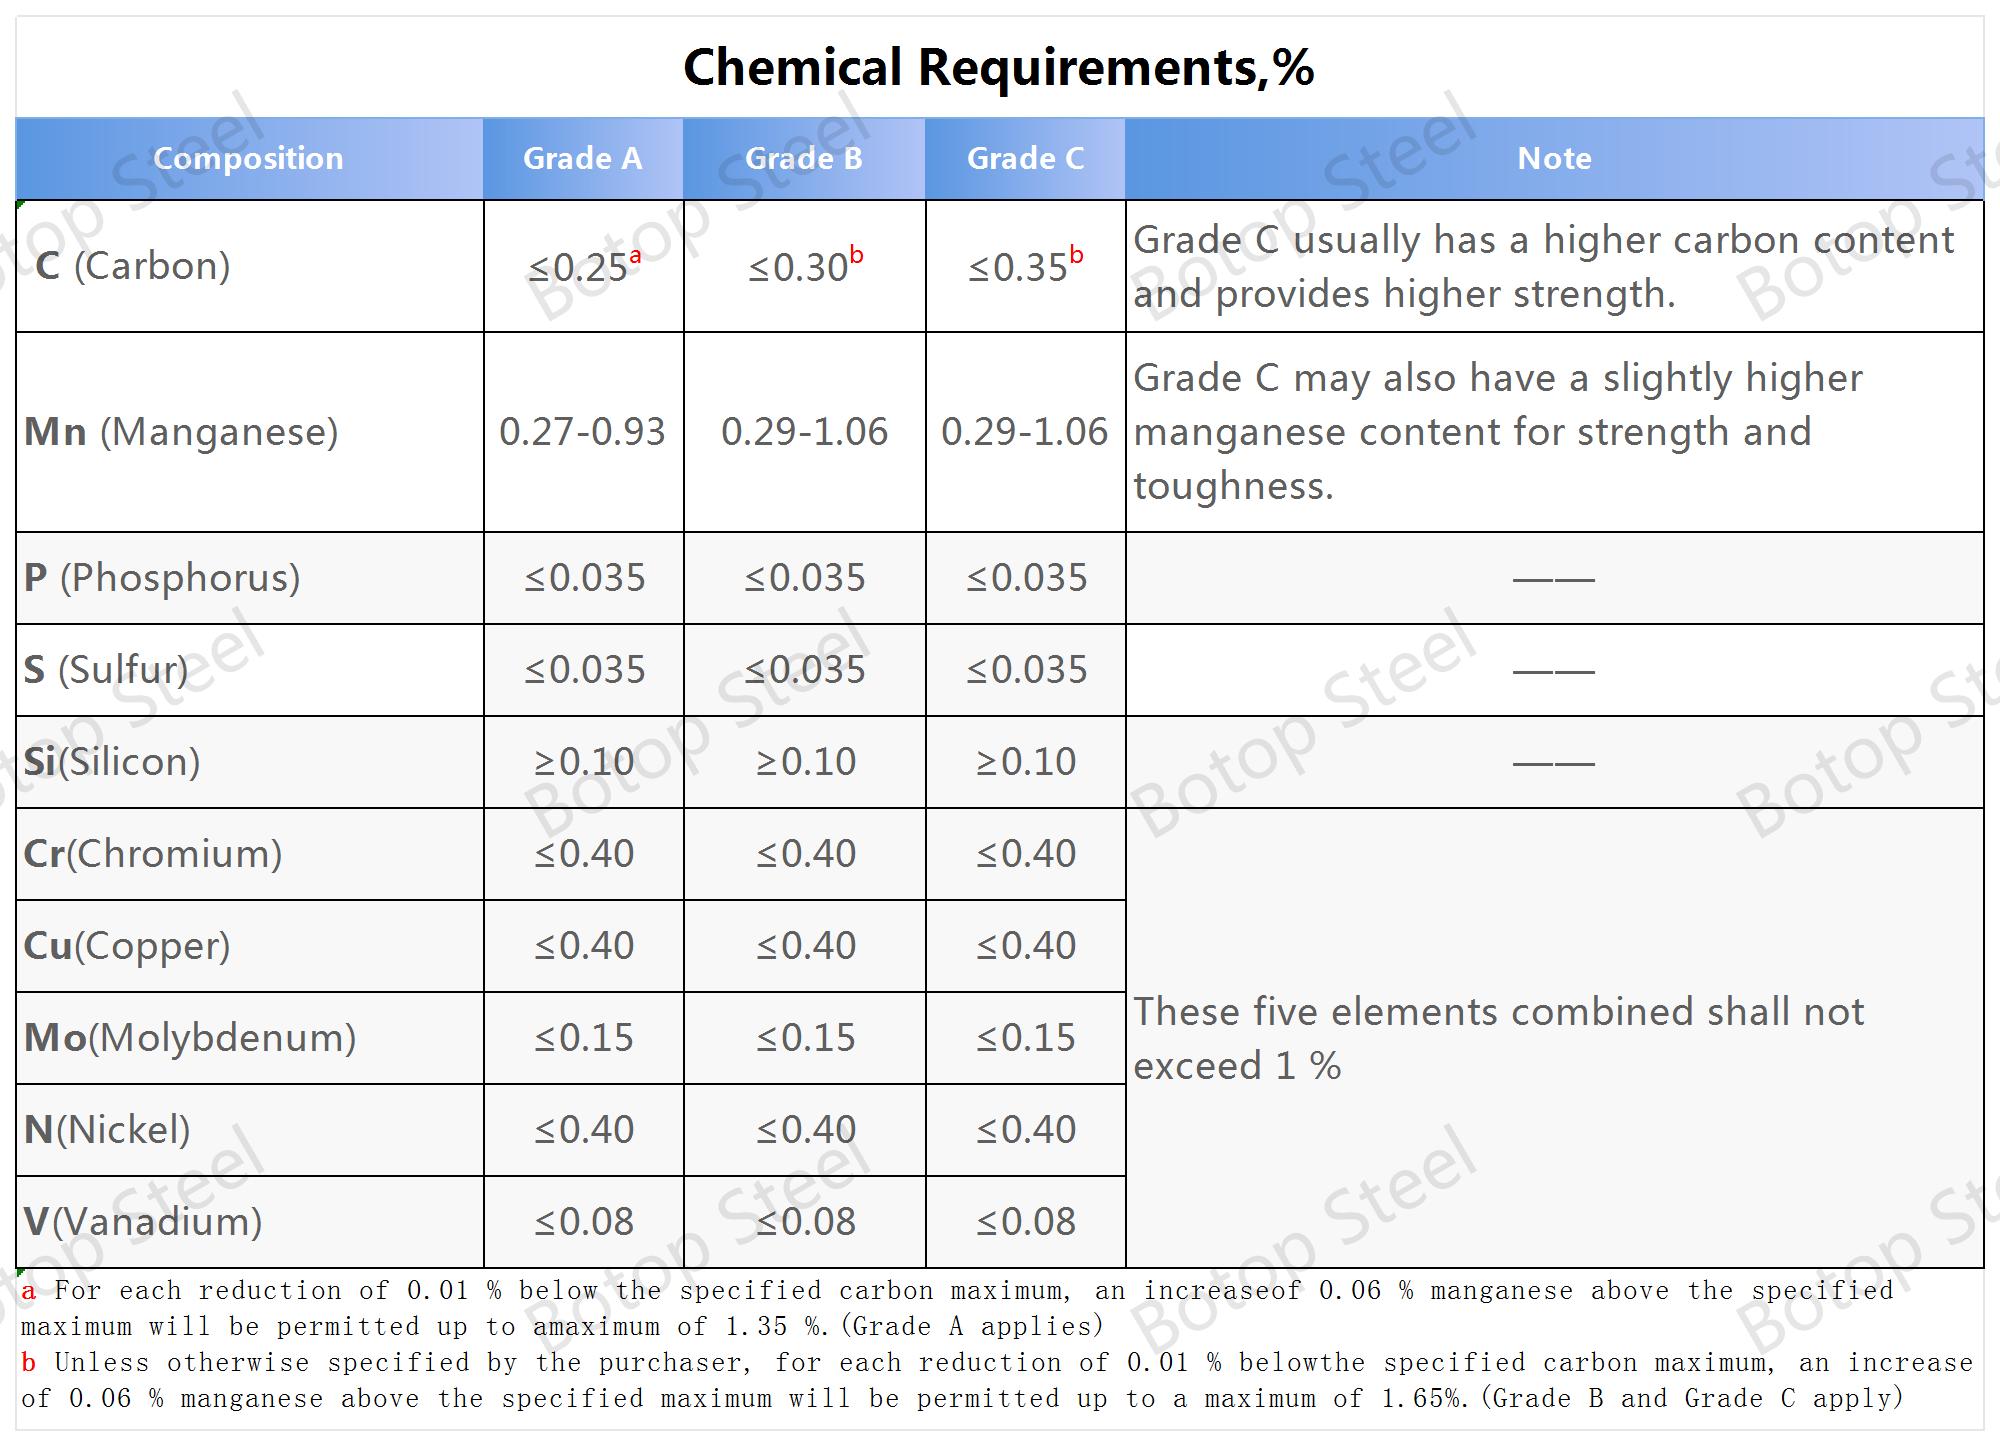 A106_نیازهای شیمیایی